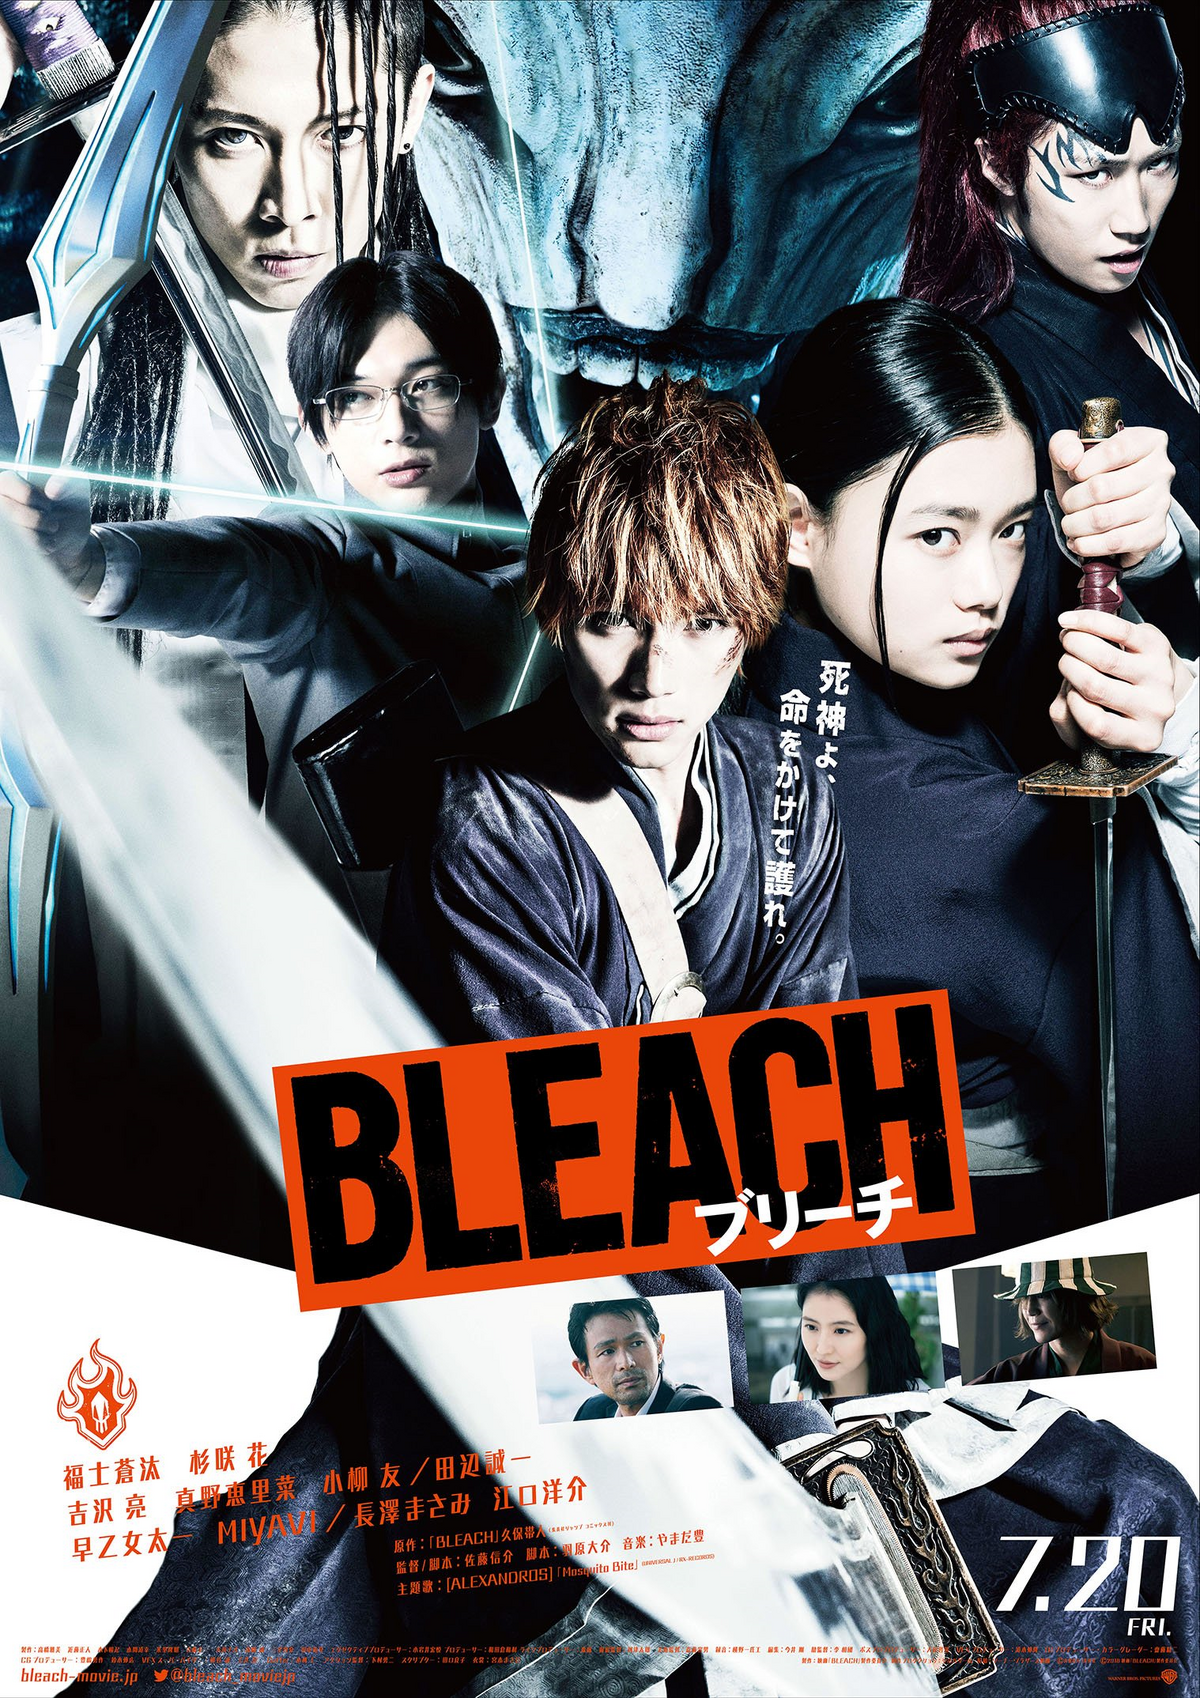 Best Bleach Anime Watch Order: Series, OVAs, and Movies